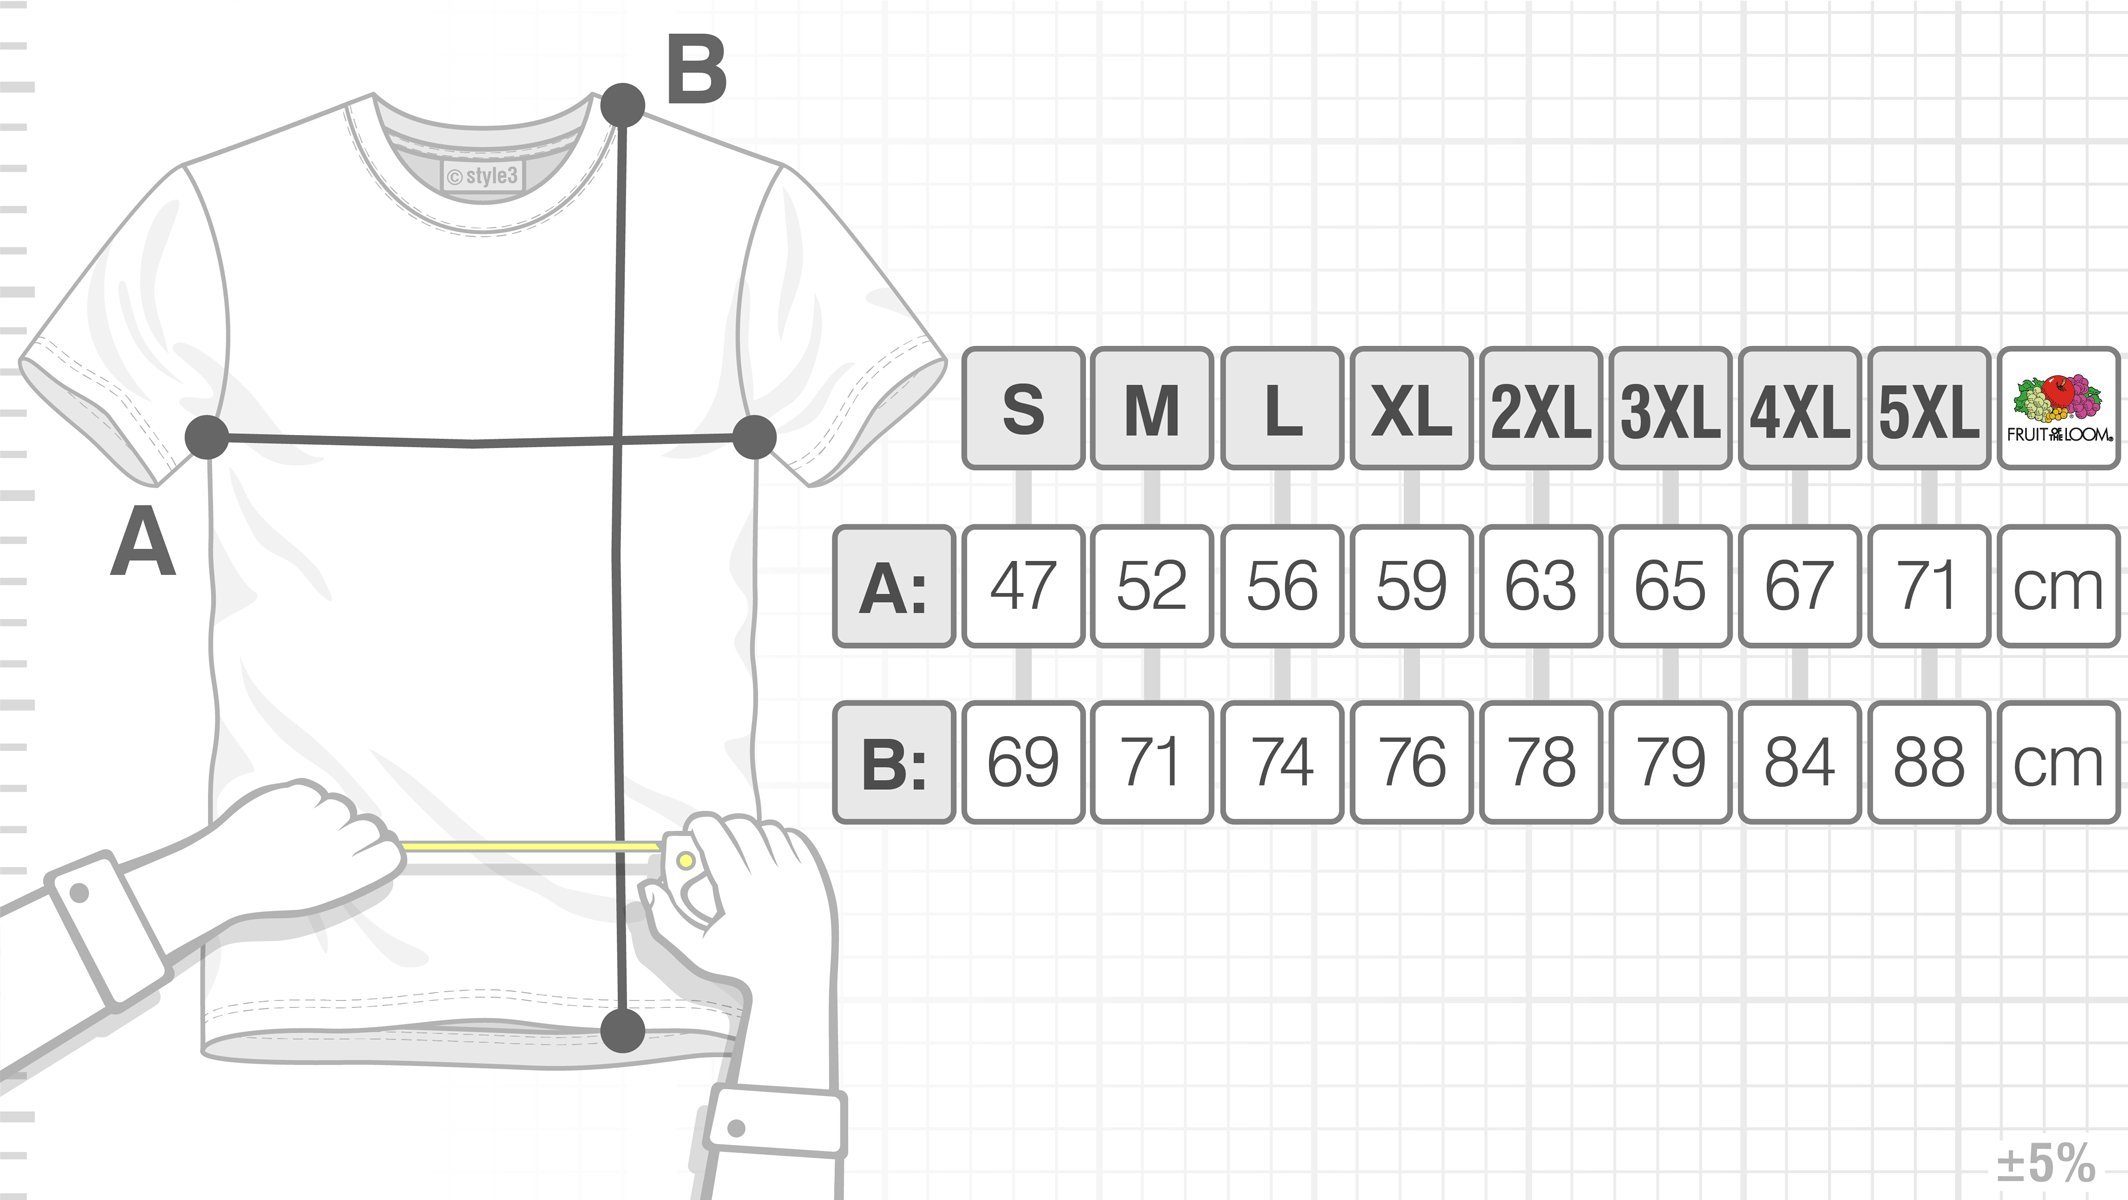 Galaxy Herren you navigationssystem - are style3 T-Shirt Print-Shirt here